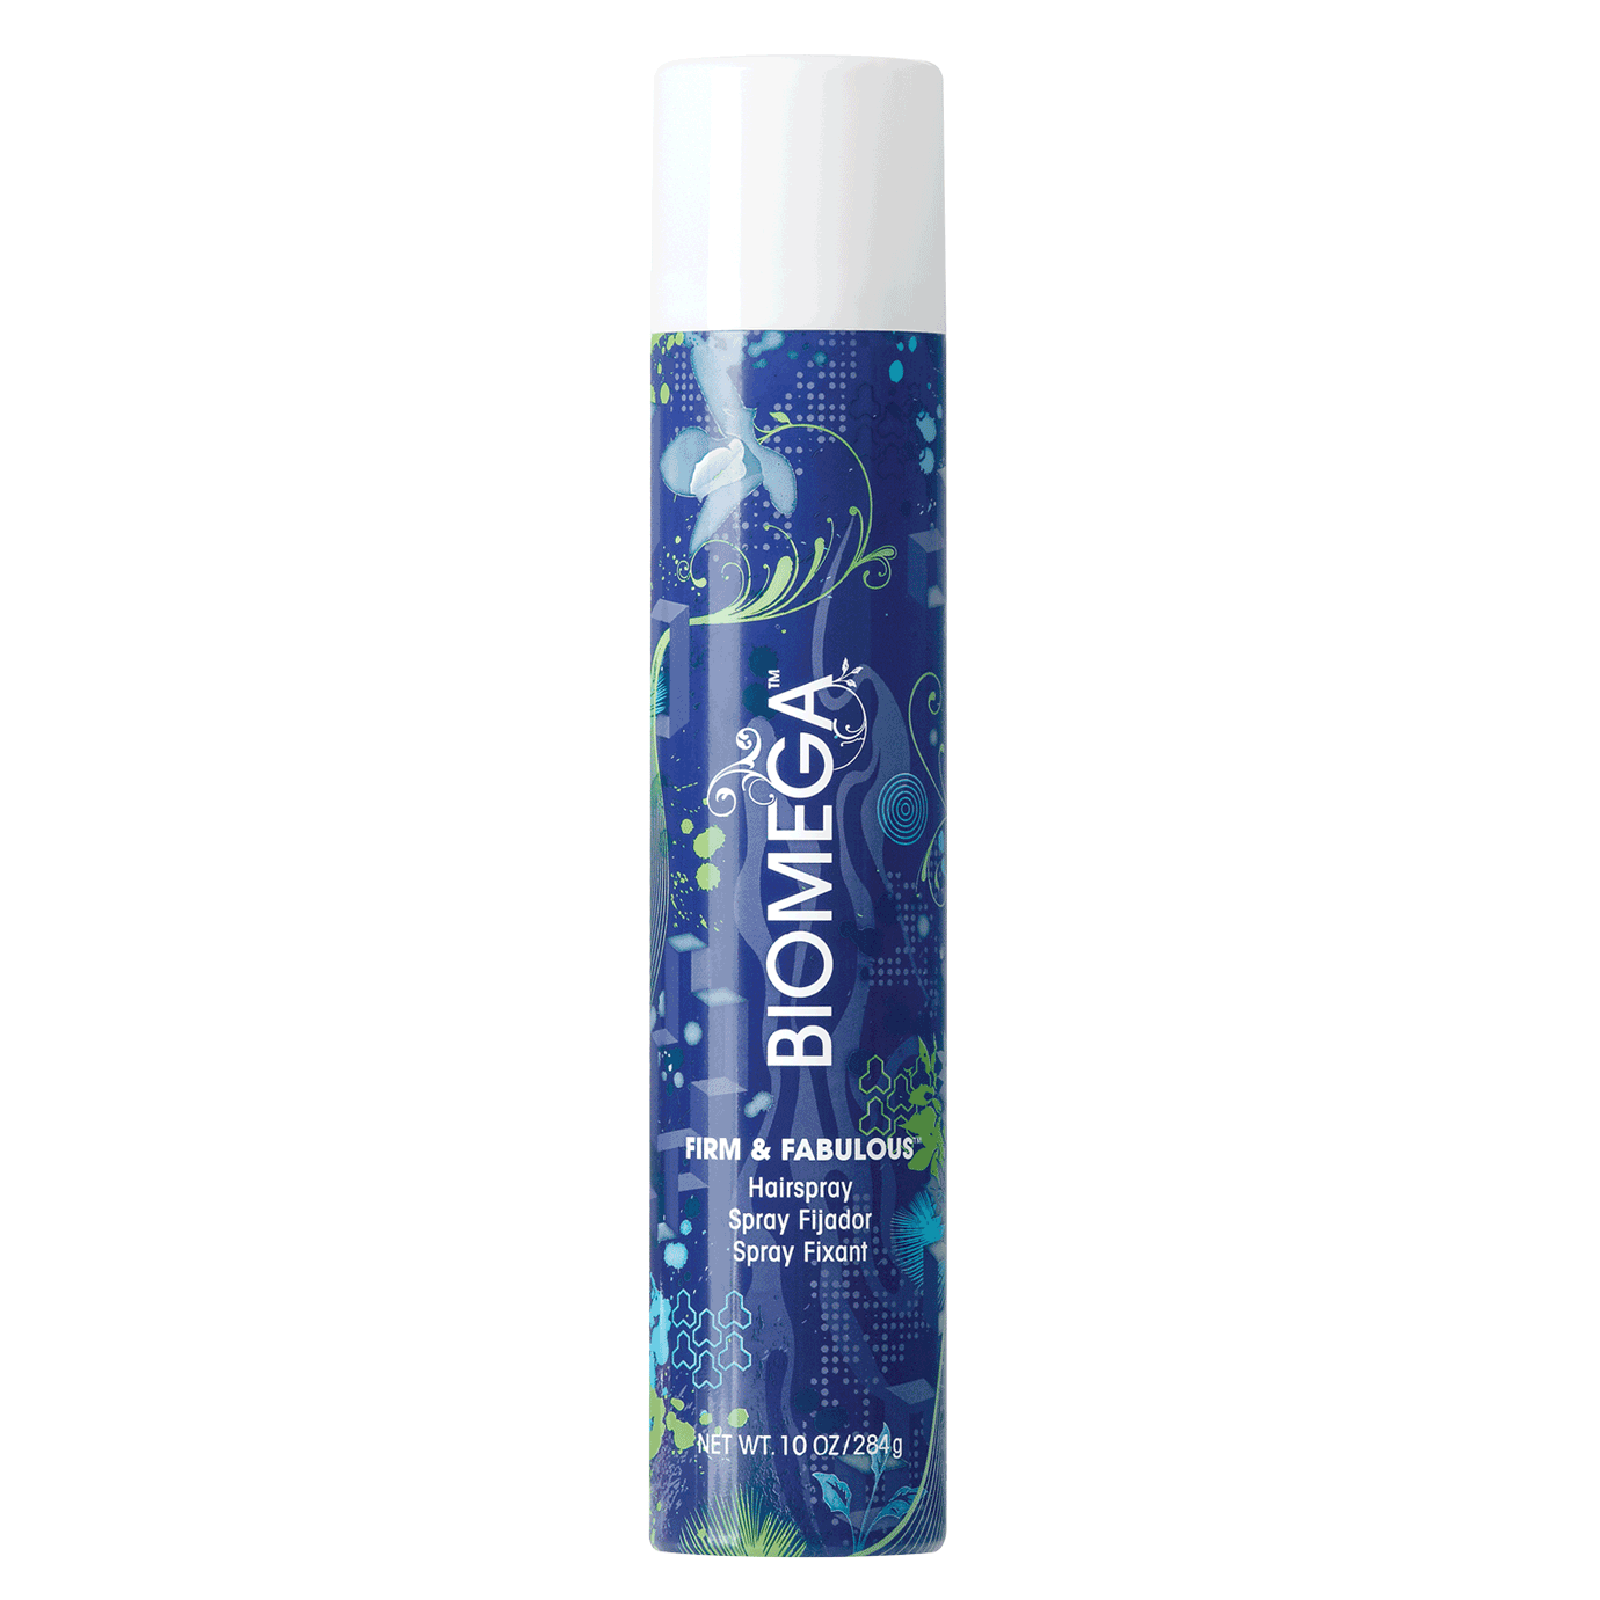 Biomega - Firm & Fabulous Hair Spray - Aquage | CosmoProf